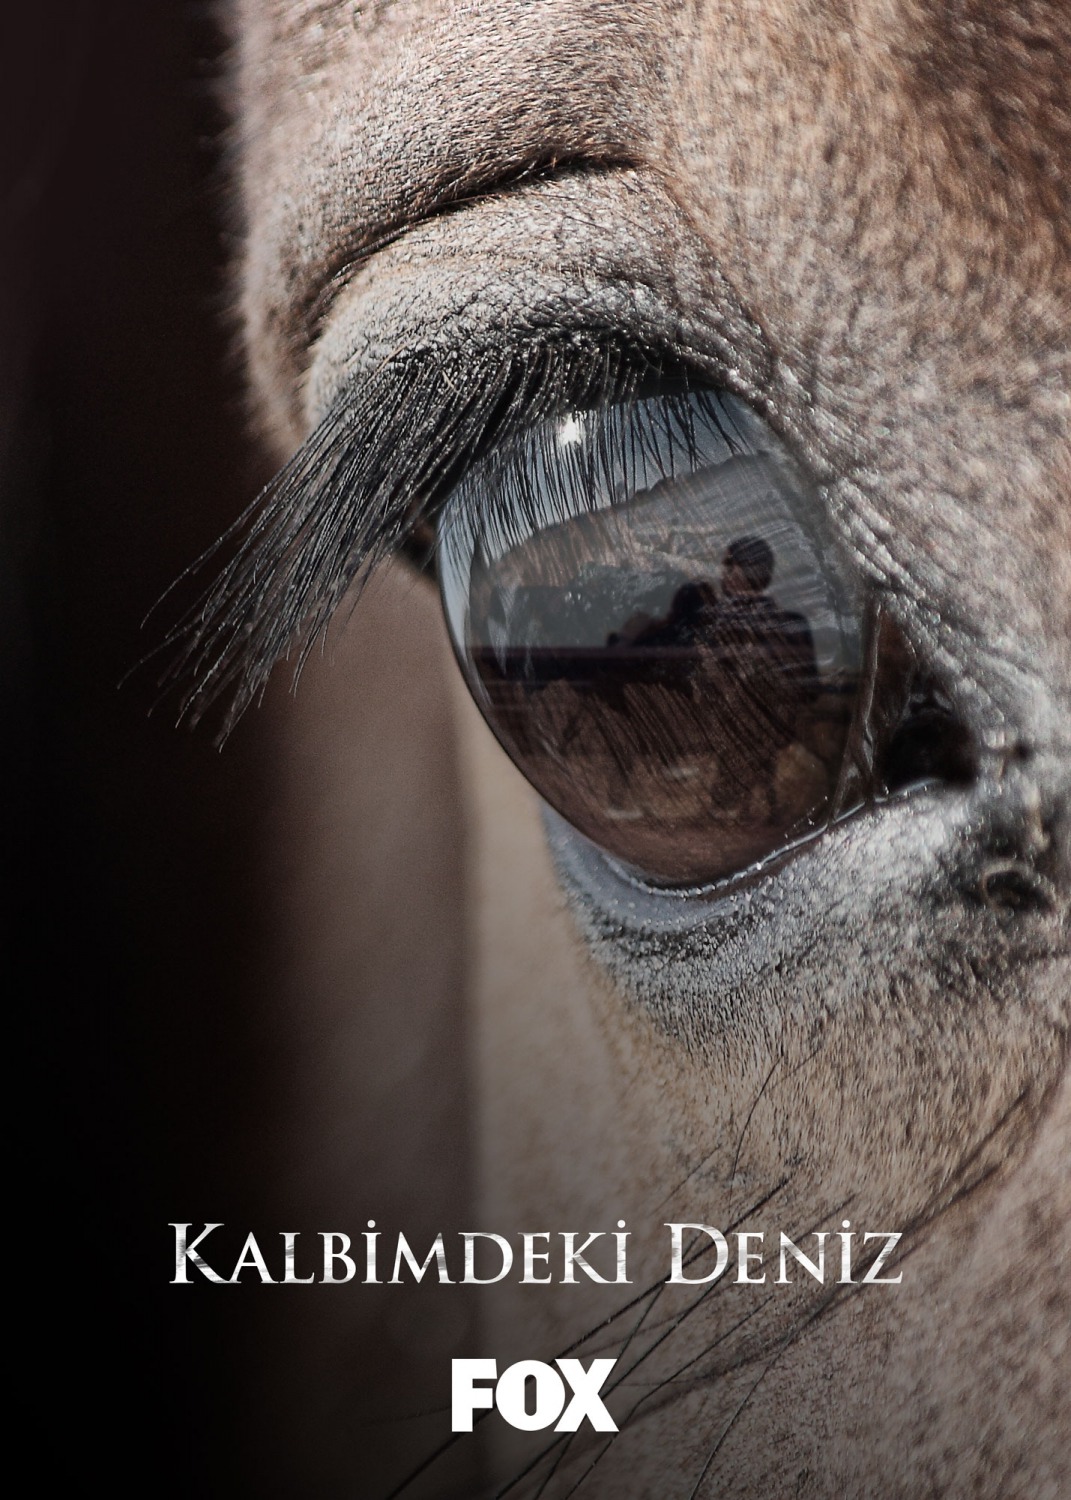 Extra Large TV Poster Image for Kalbimdeki Deniz (#1 of 3)